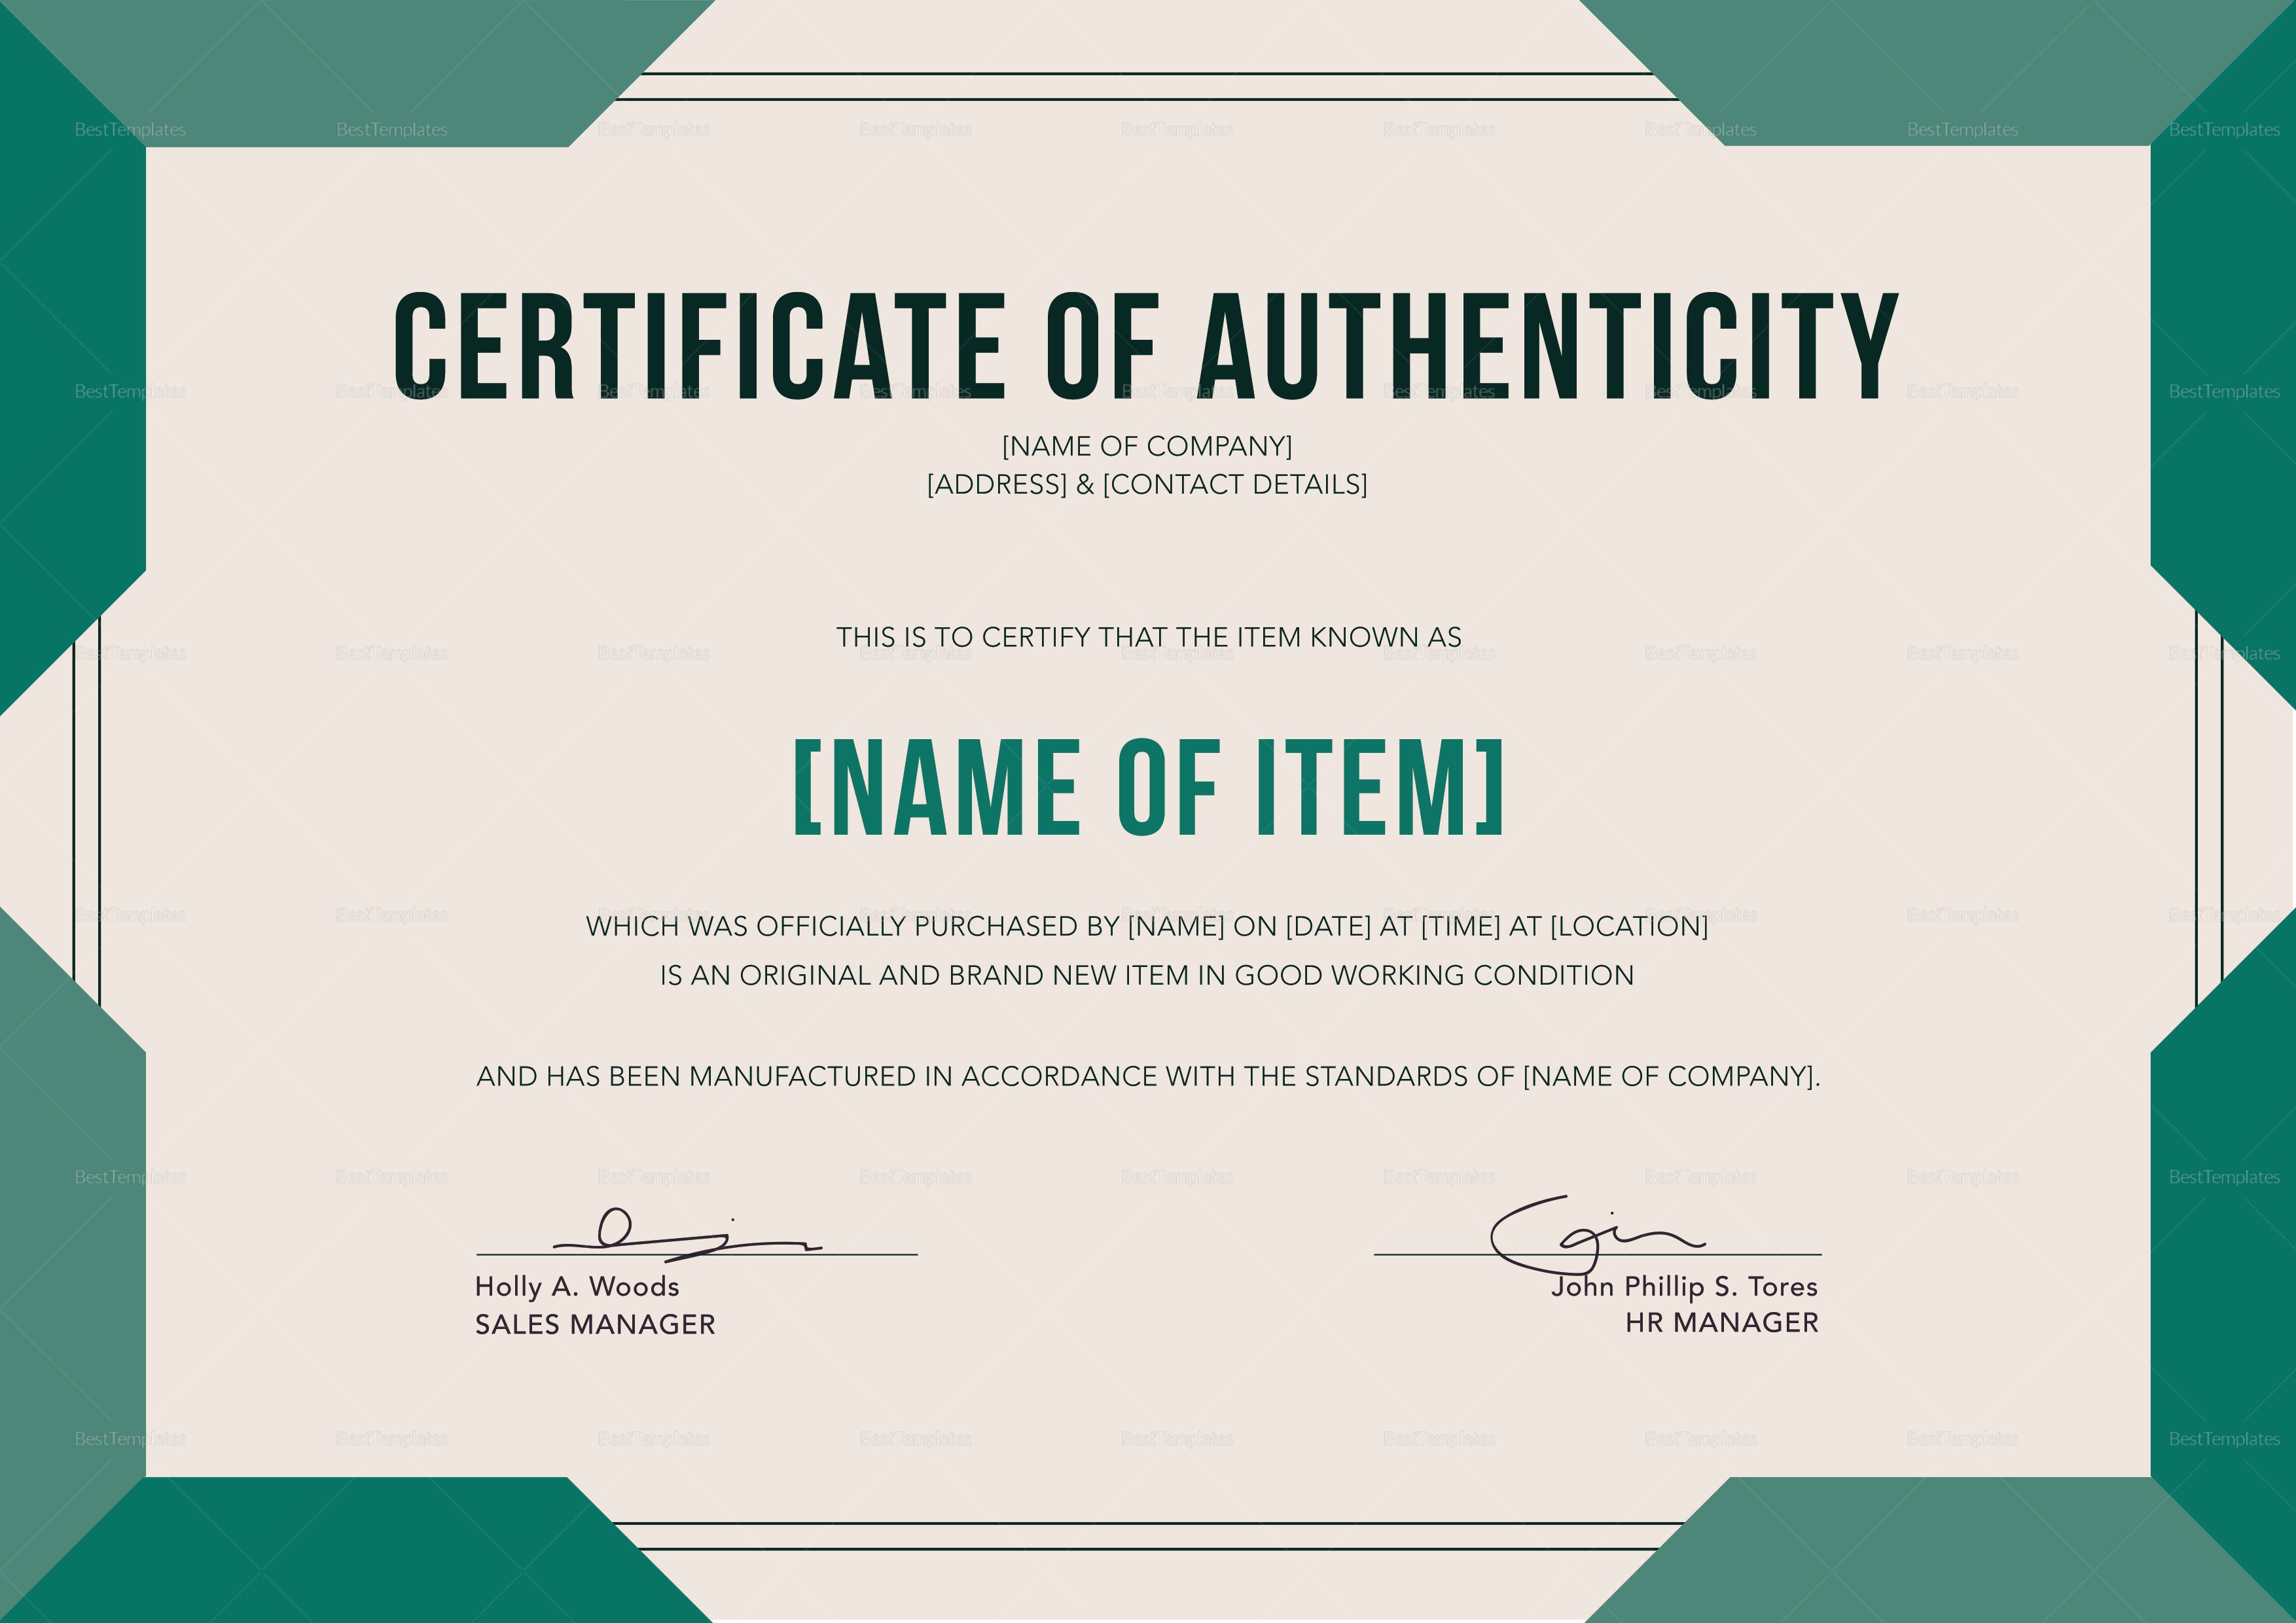 Elegant Certificate of Authenticity Design Template in PSD